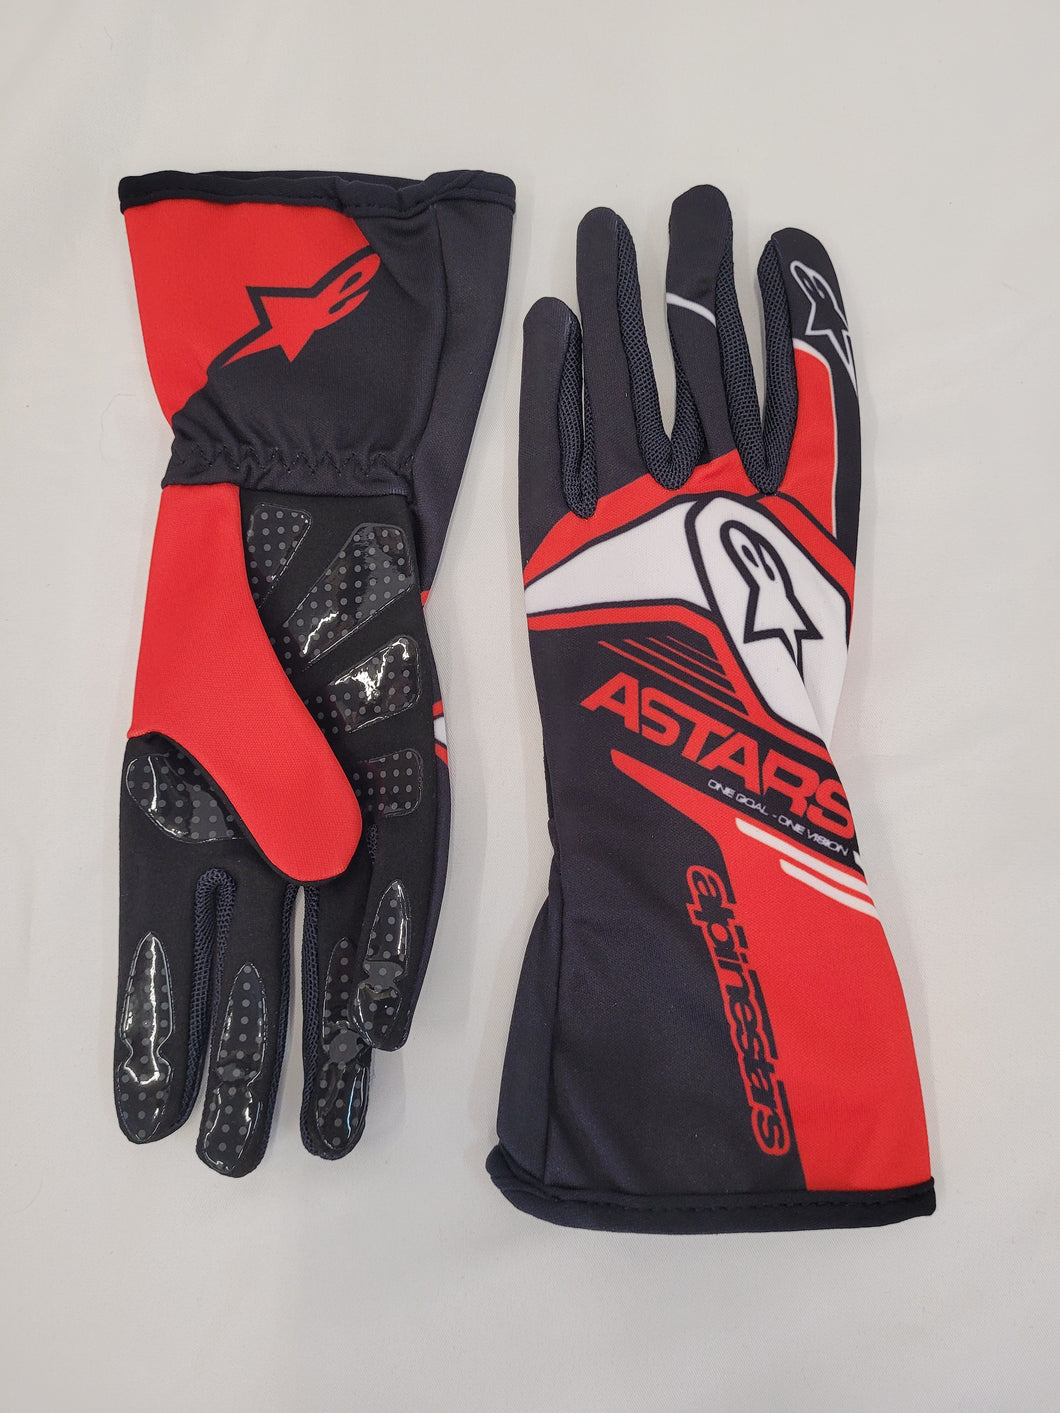 AlpineStars Tech 1K Corporate Race Gloves (Adult)